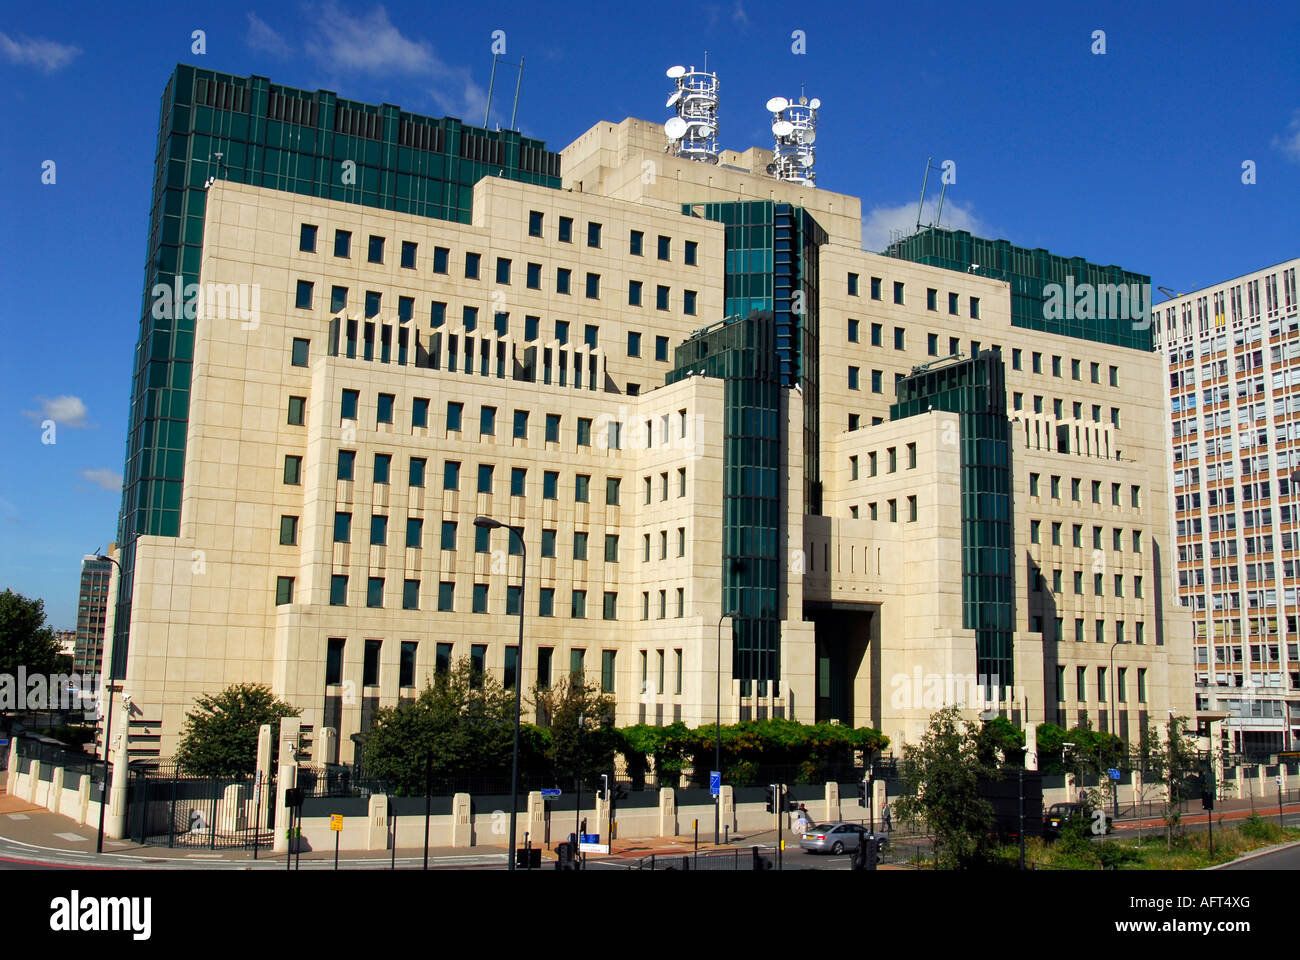 Facade of the Secret Intelligence Service (SIS) aka MI6, Vauxhall Cross, London, UK. Stock Photo